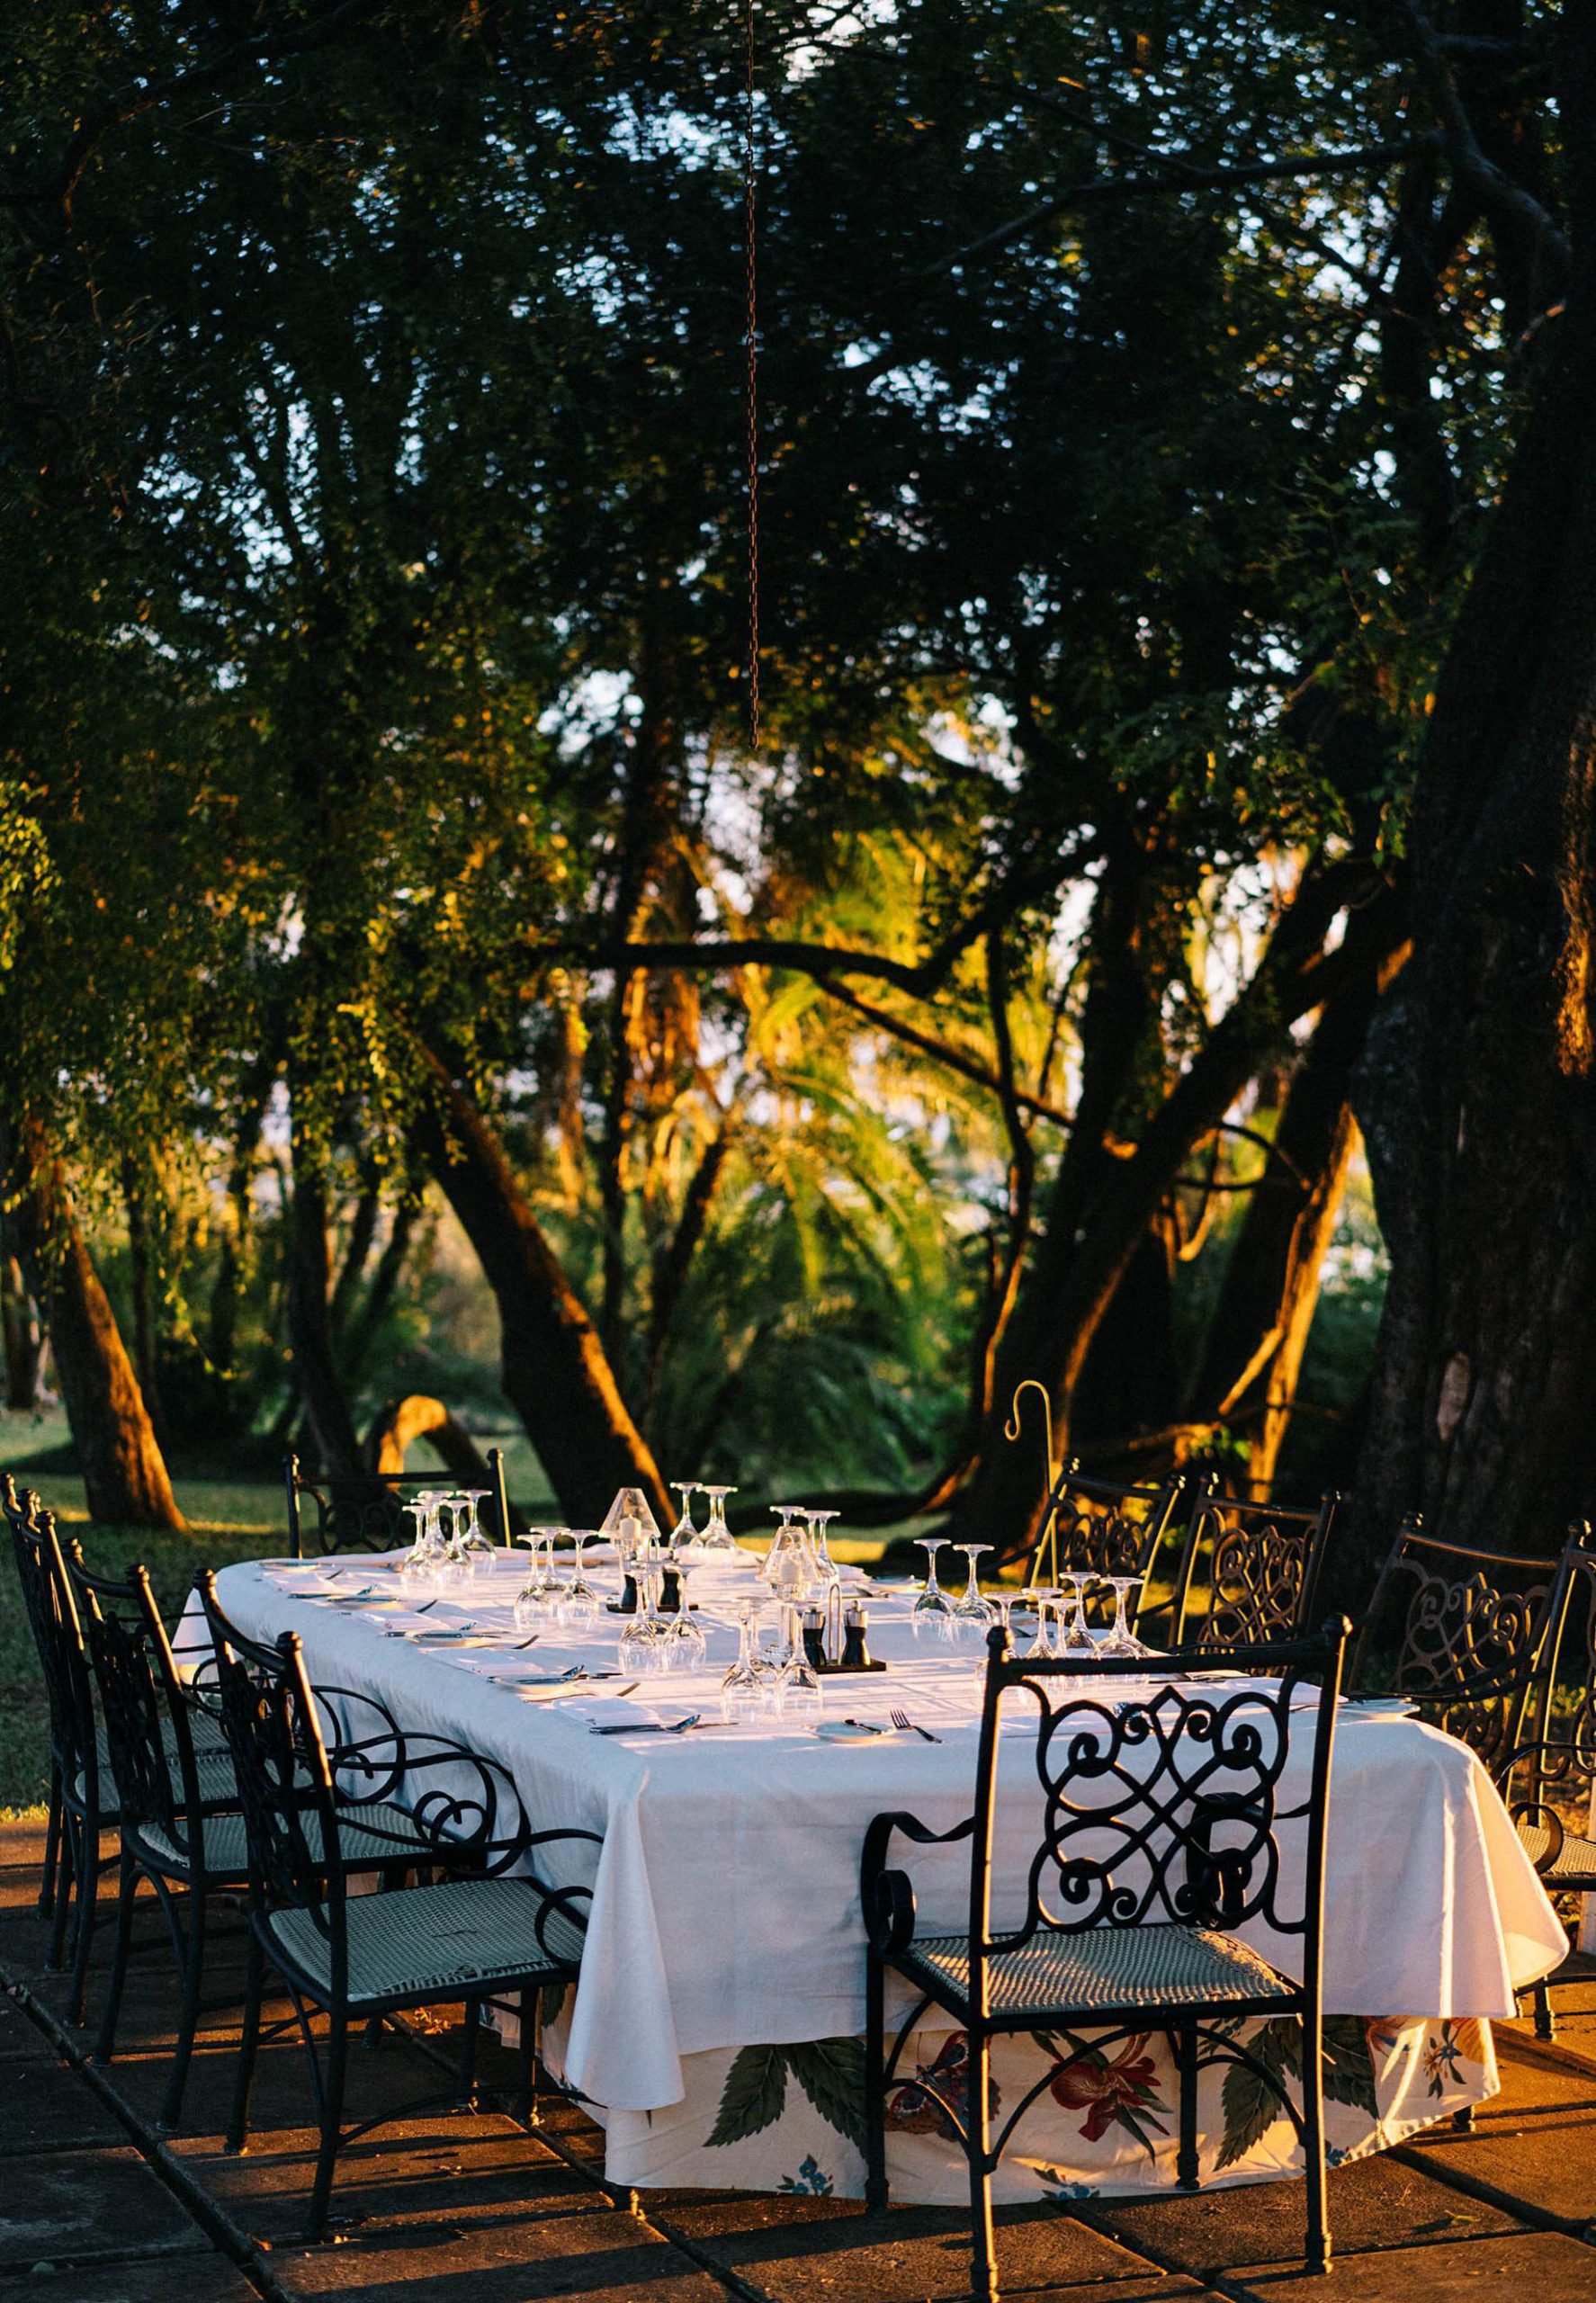 Royal Livingstone Victoria Falls Hotel by Anantara - Zambia - Outdoor Dining